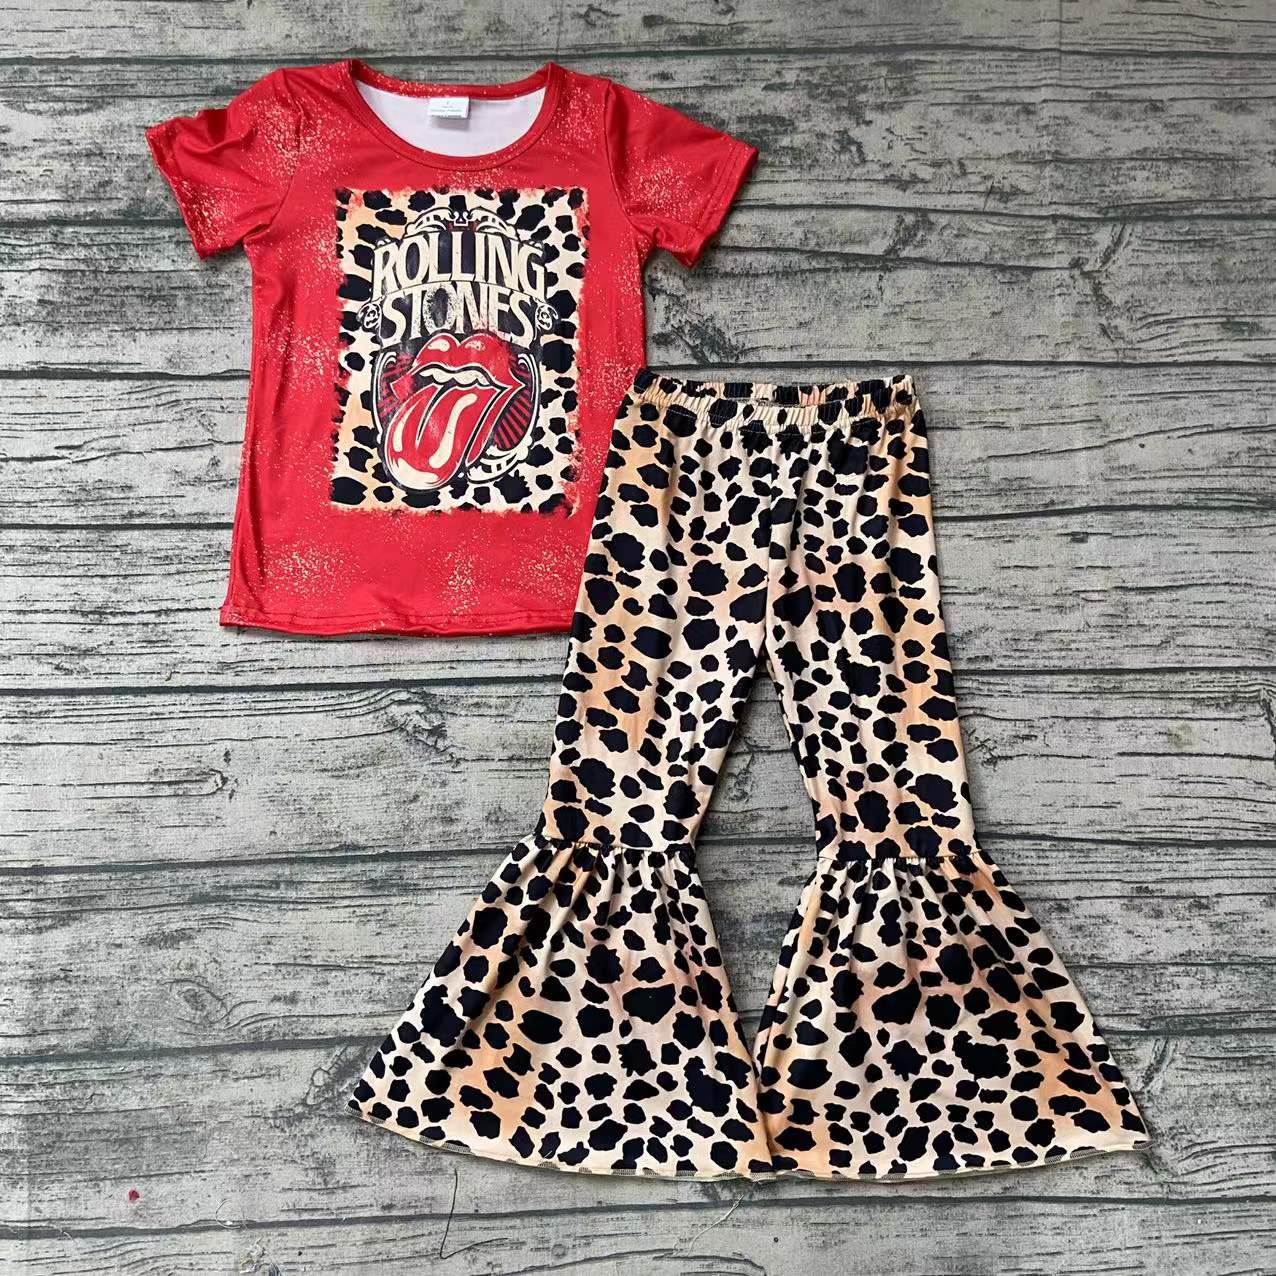 B0-1Baby girls Singer red leopard bell bottom pants sets